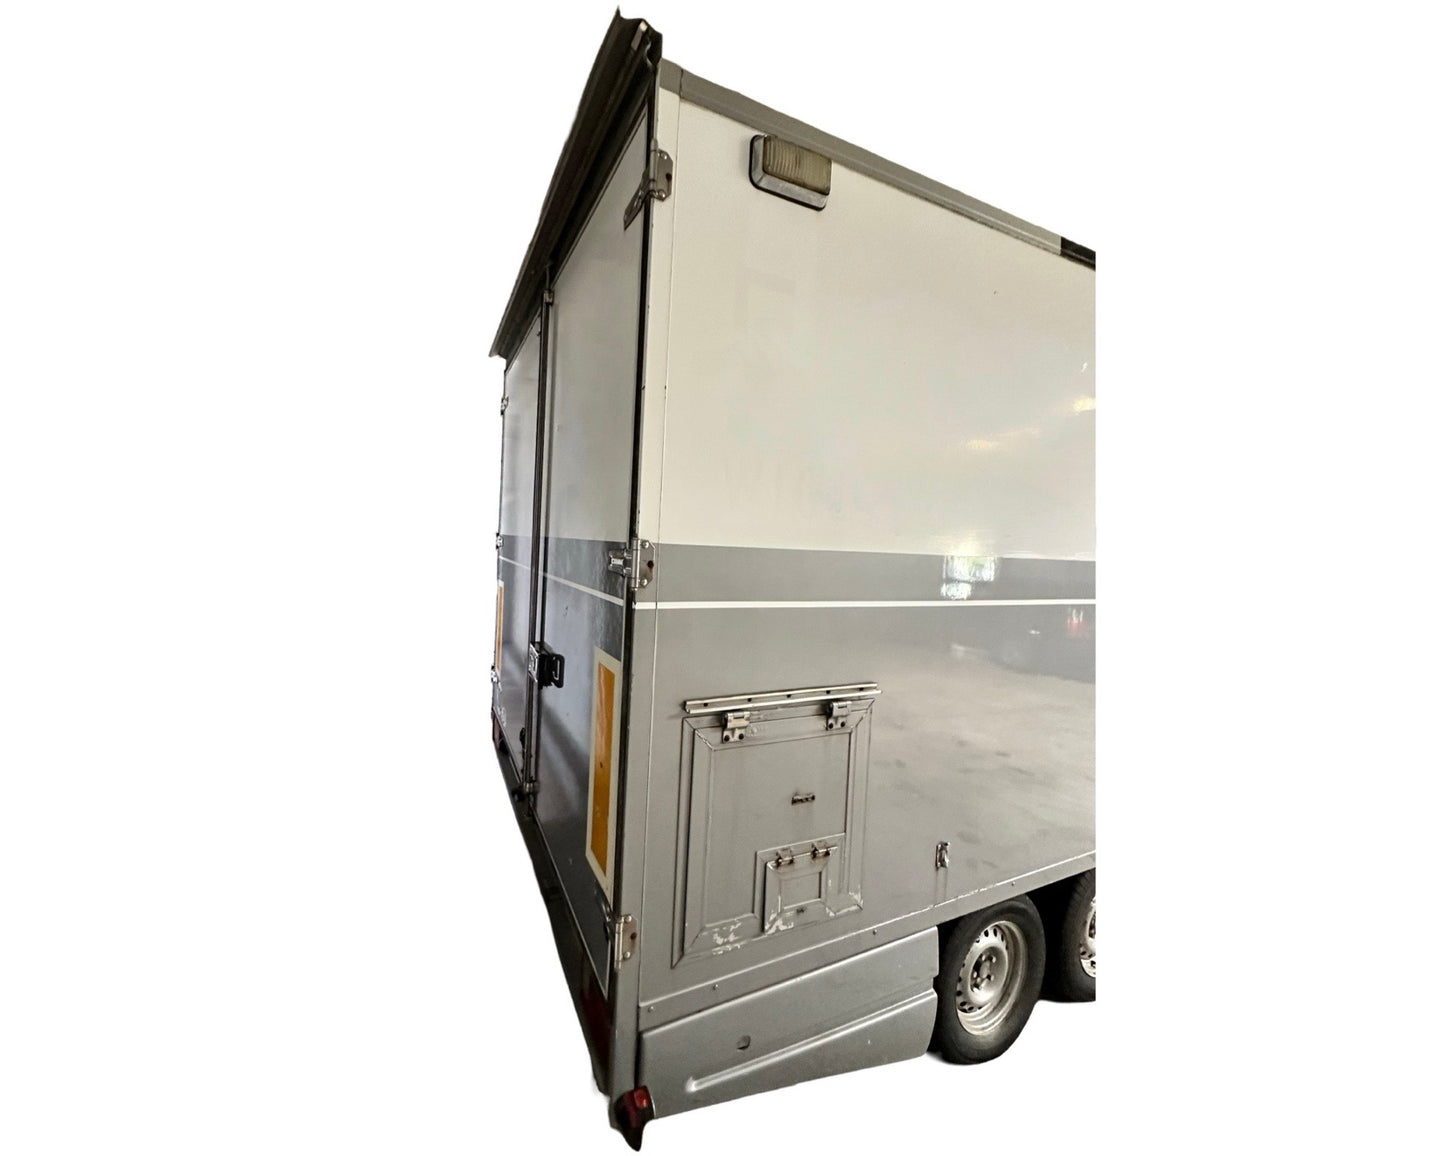 OB Van for 6-8 Camera production incl. trailer